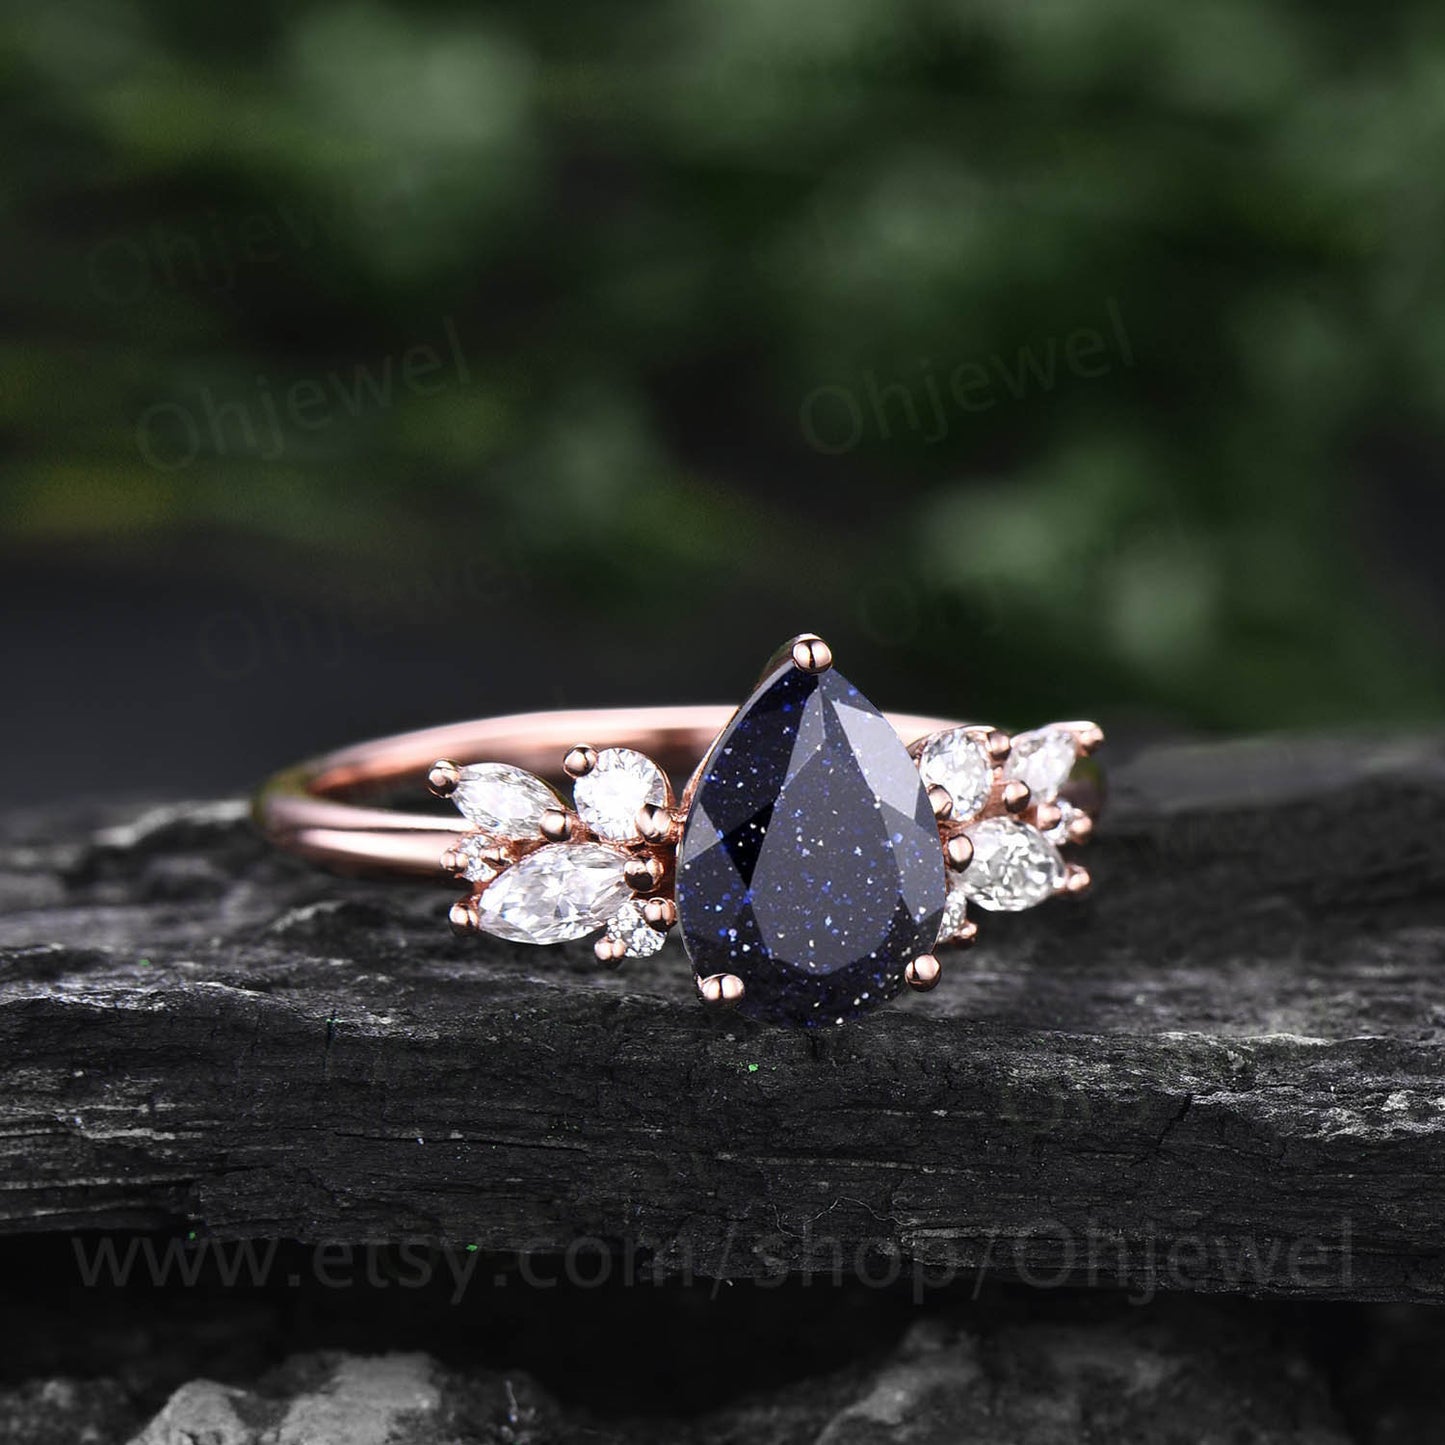 Pear shaped blue sandstone ring vintage Alternative unique cluster blue sandstone engagement ring rose gold diamond wedding ring for women